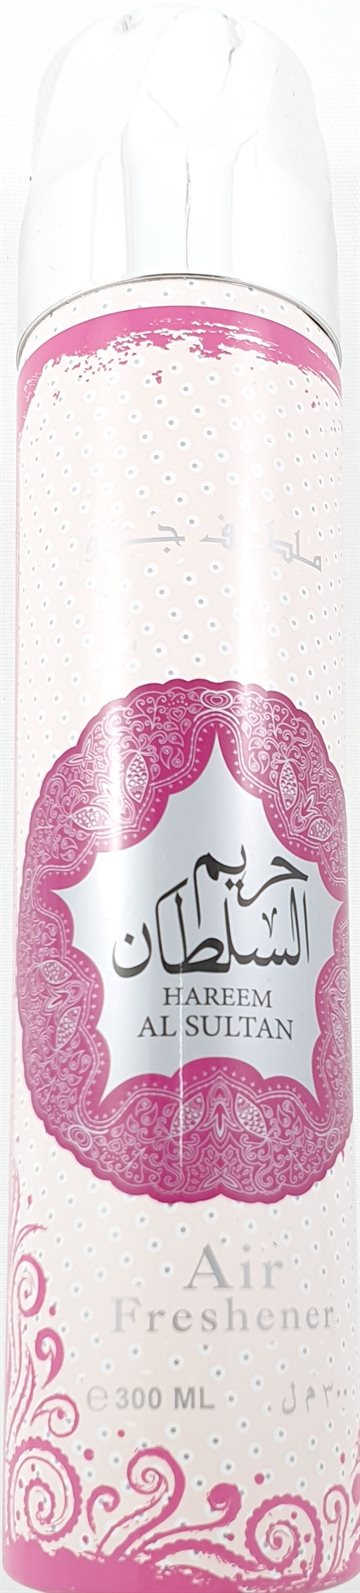 Air Freshener Hareem Al Sultan 300ml.